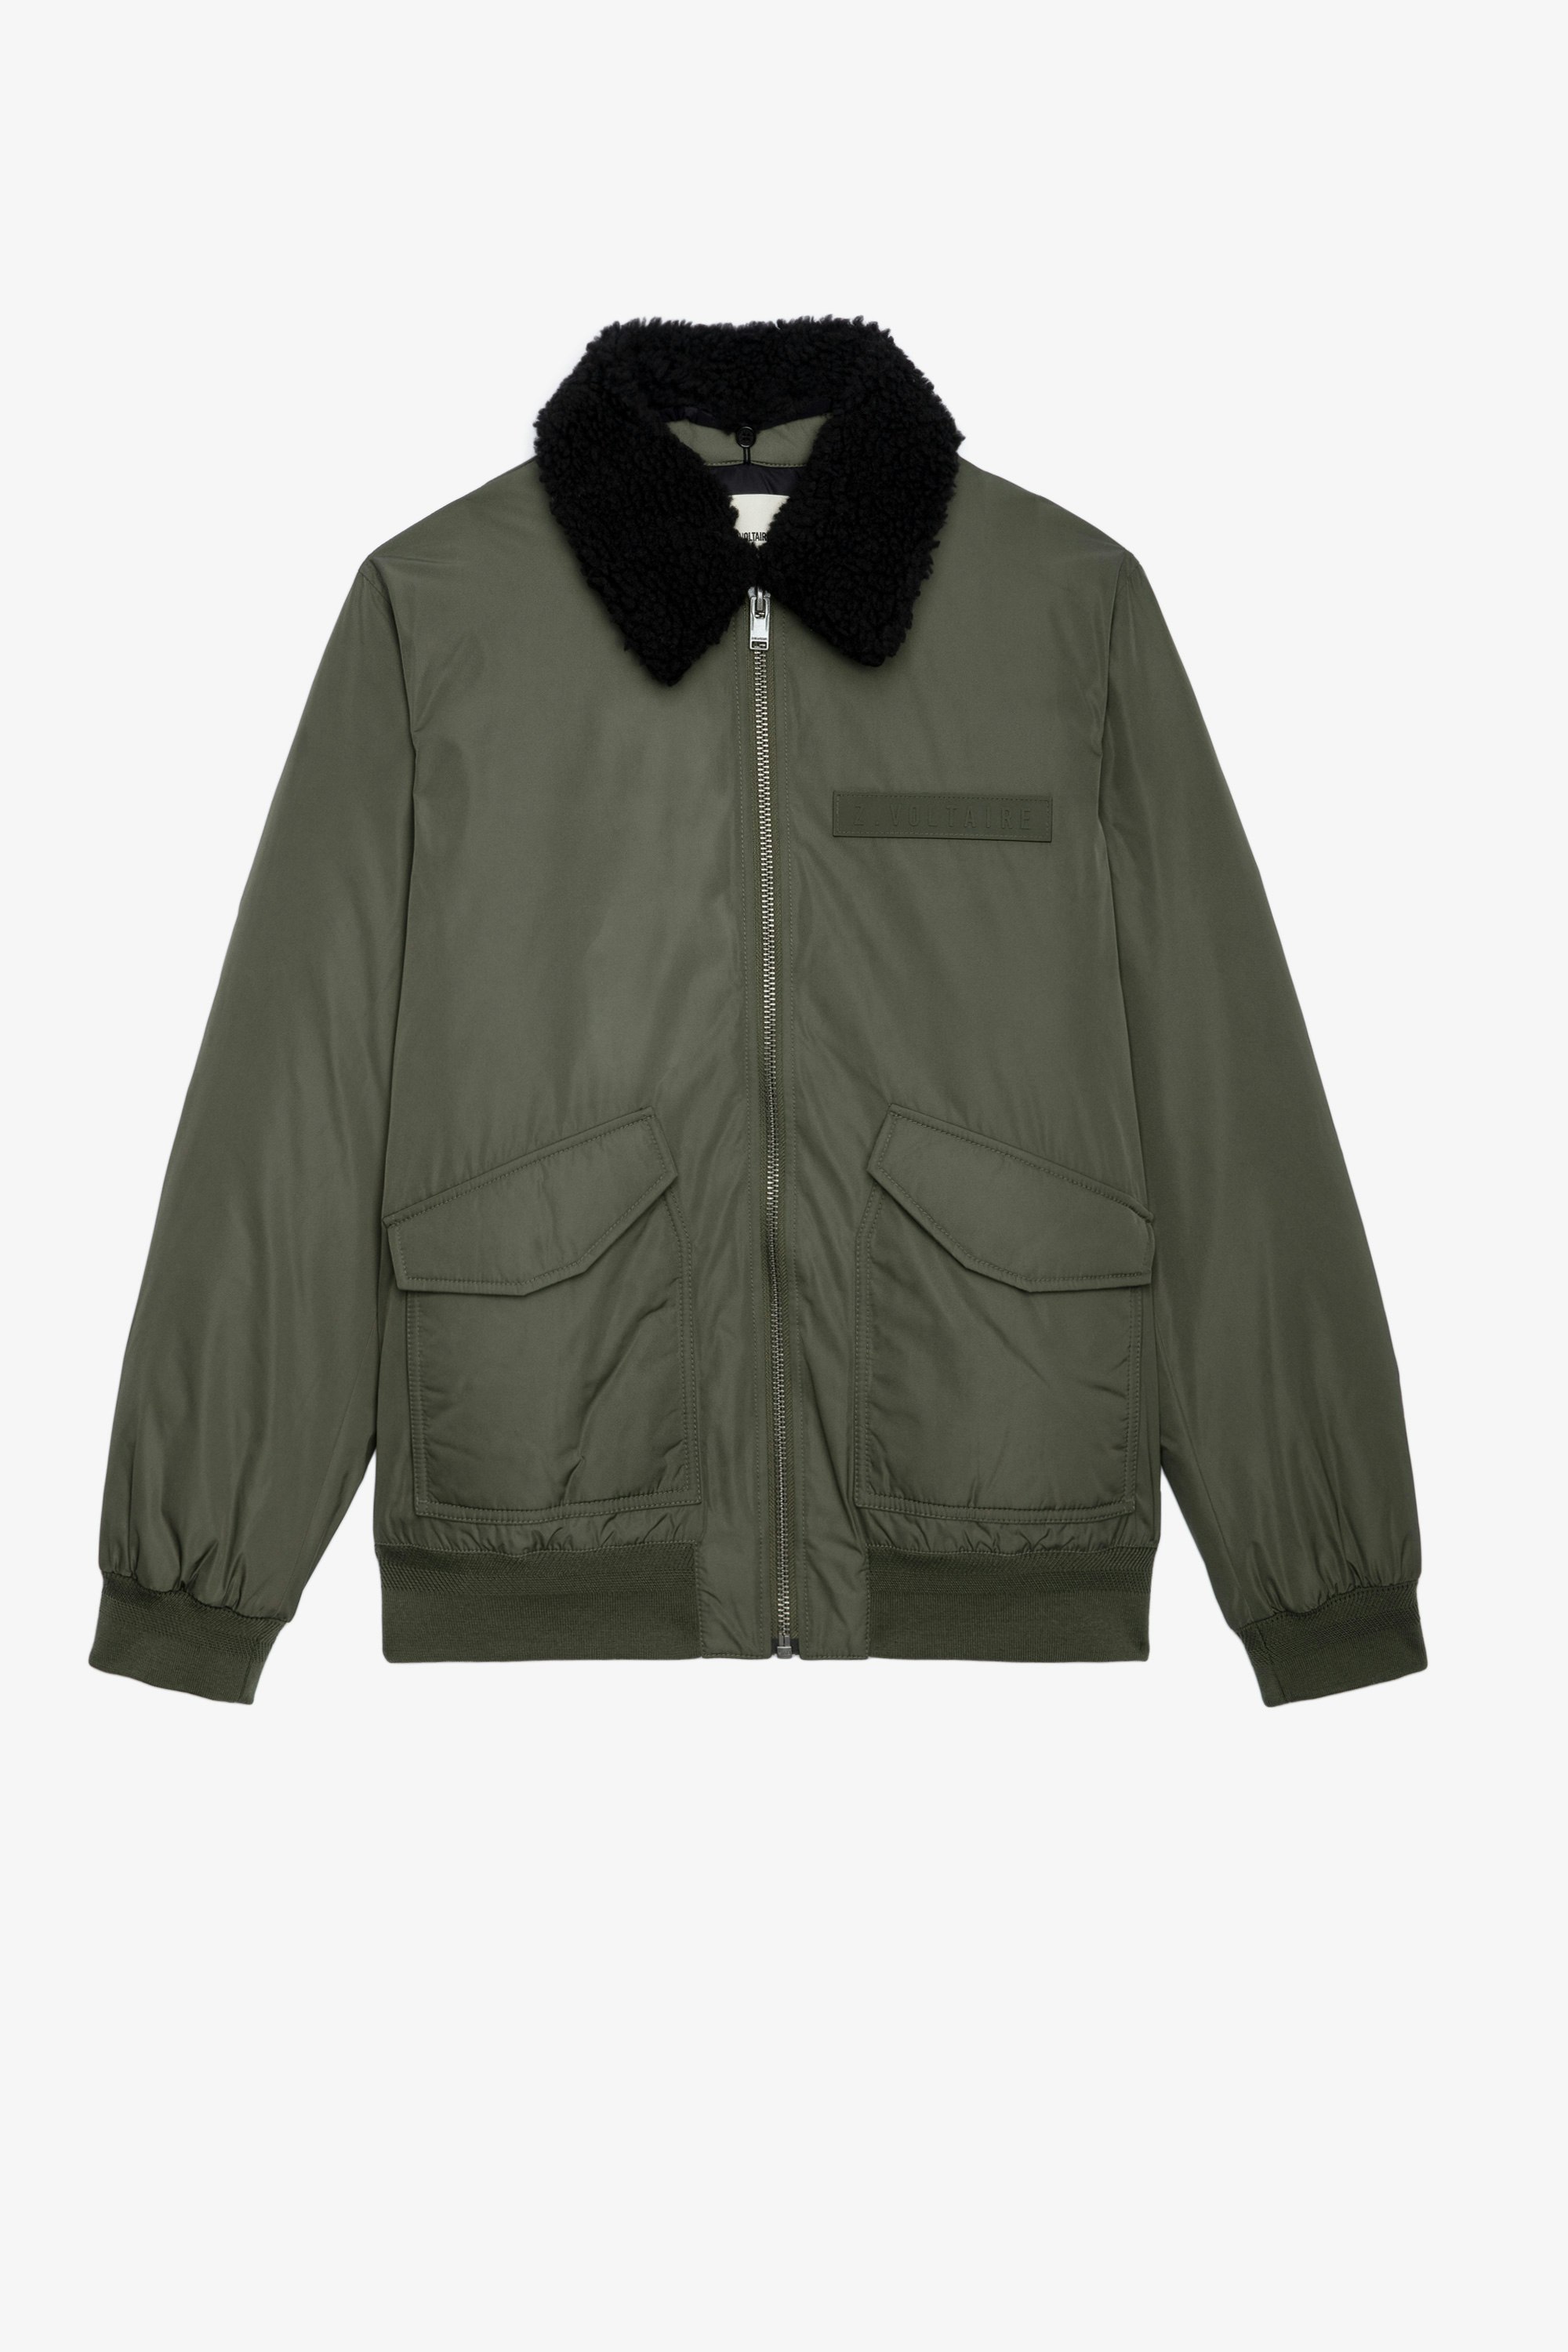 Mate Nylon Bomber Jacket Men’s Khaki military bomber jacket with removable faux fur collar